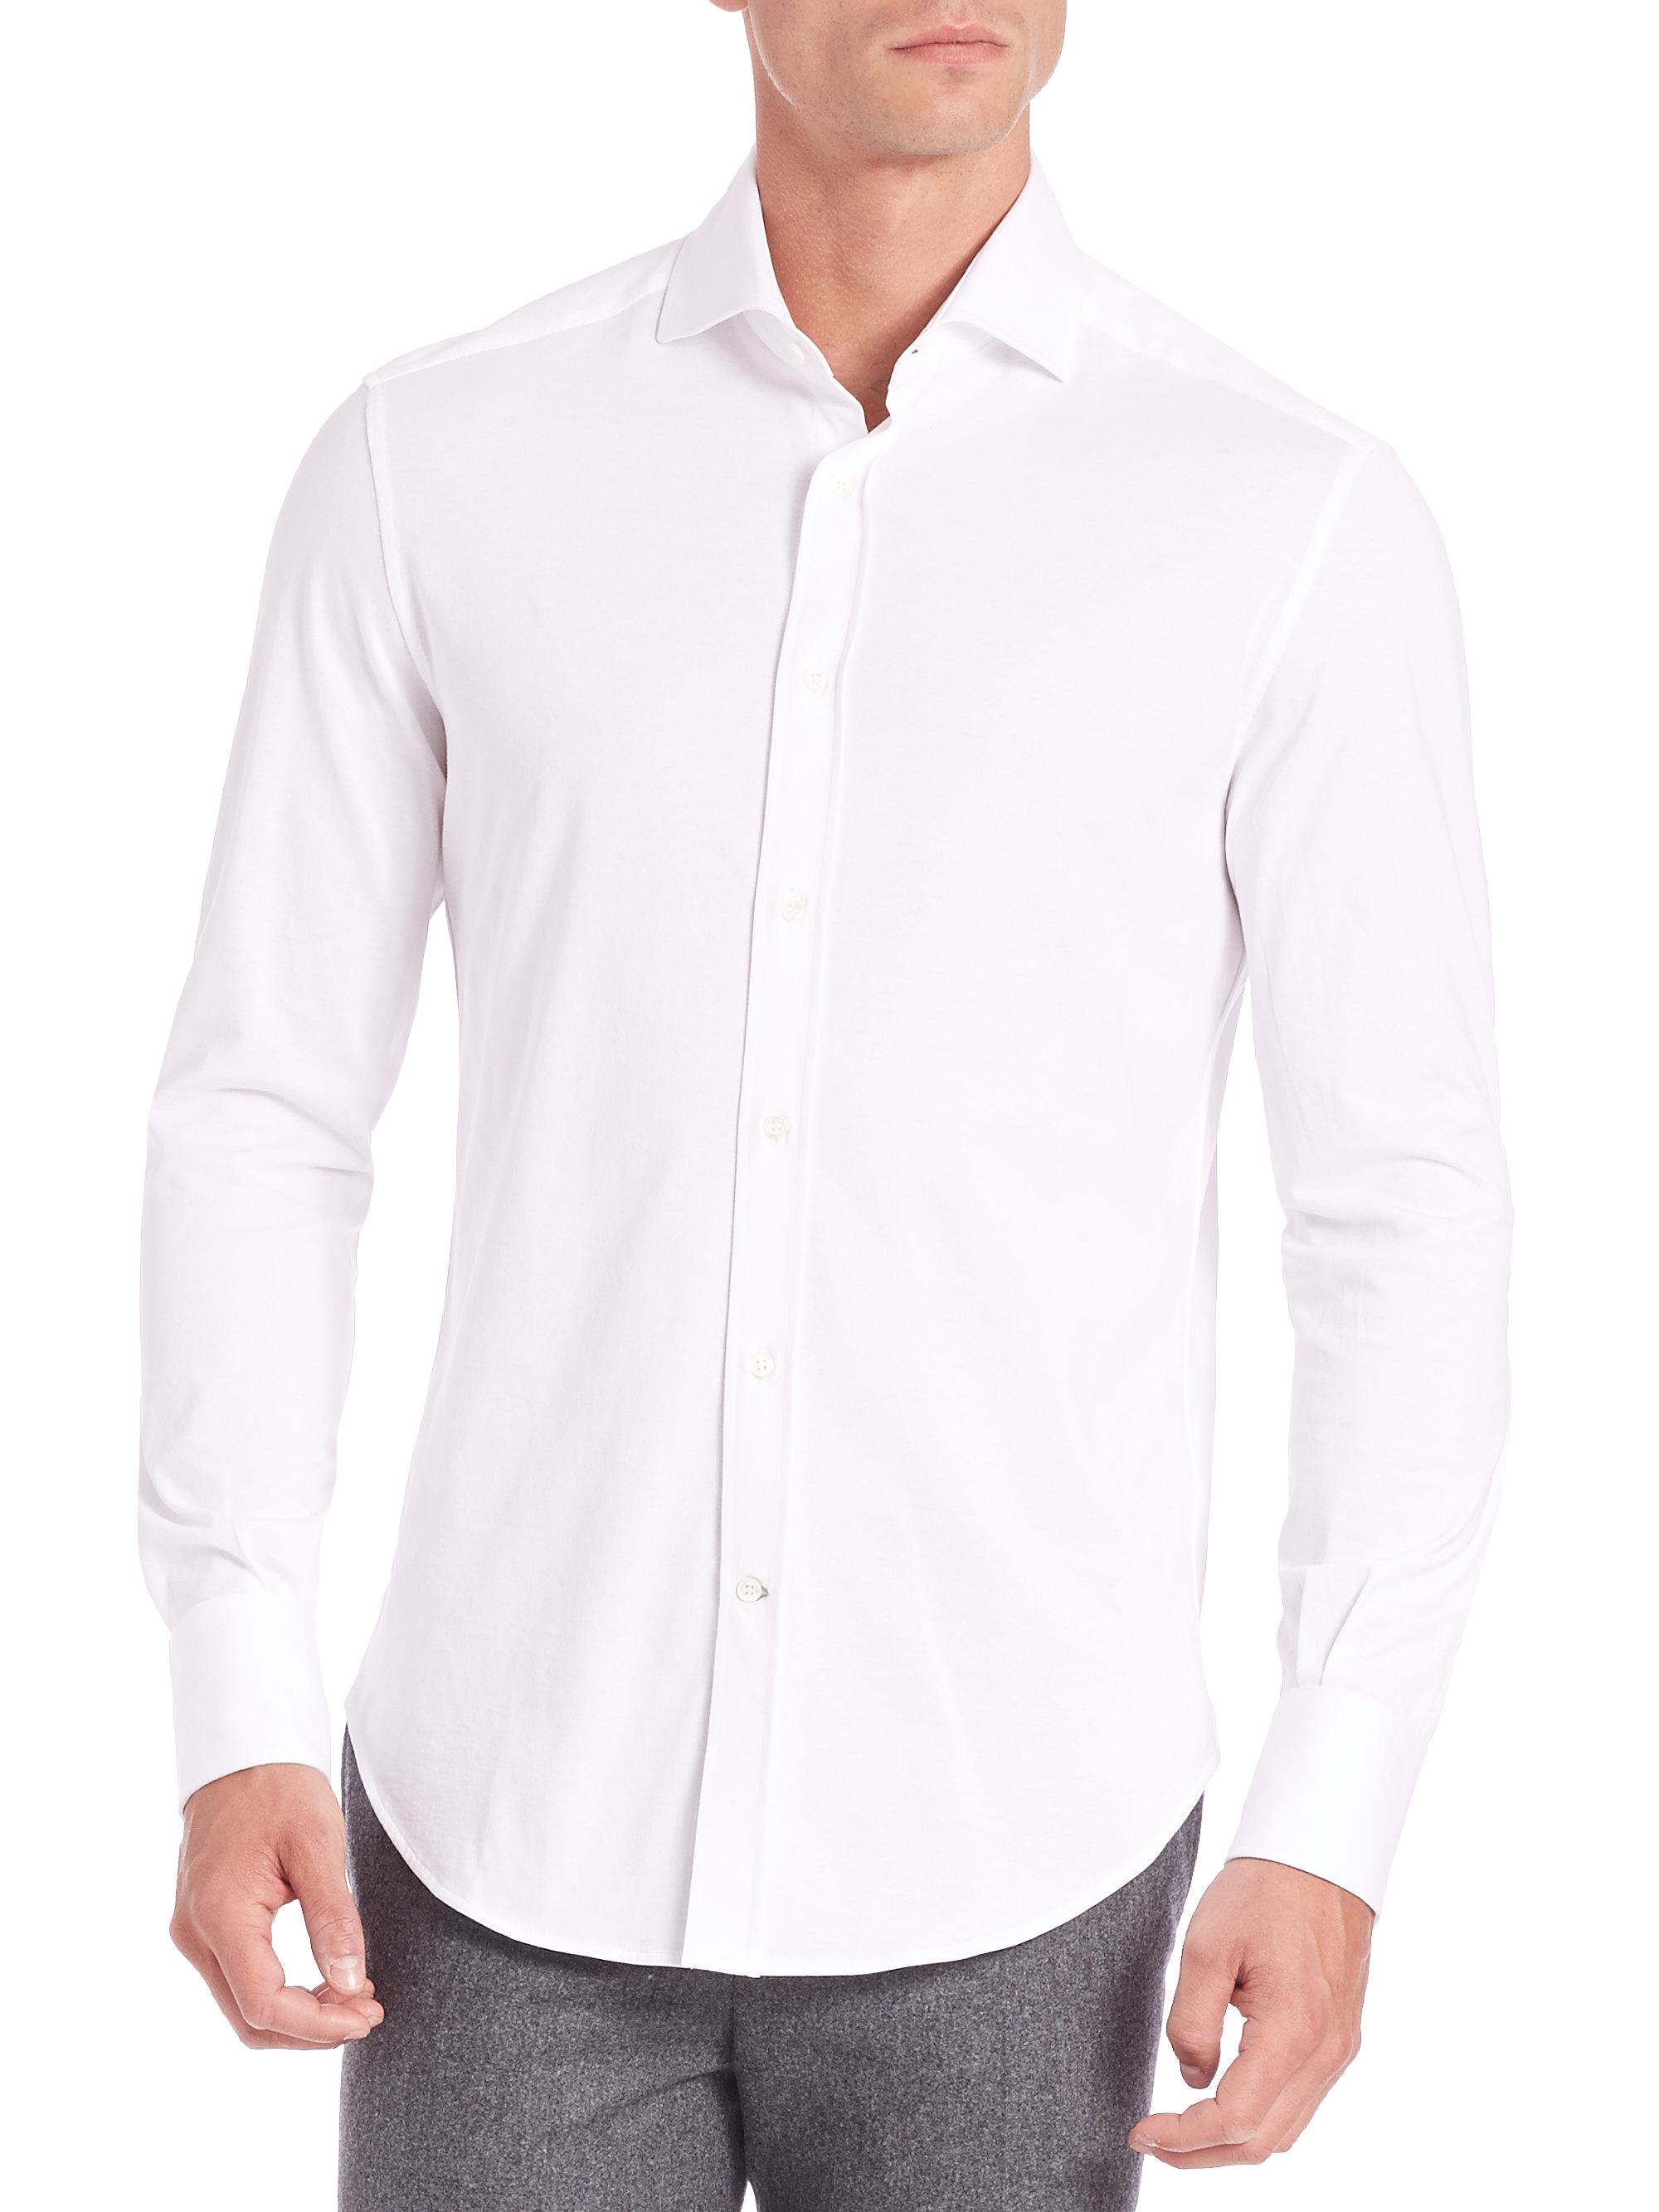 Lyst - Brunello Cucinelli Jersey Knit Button-down Shirt in White for Men